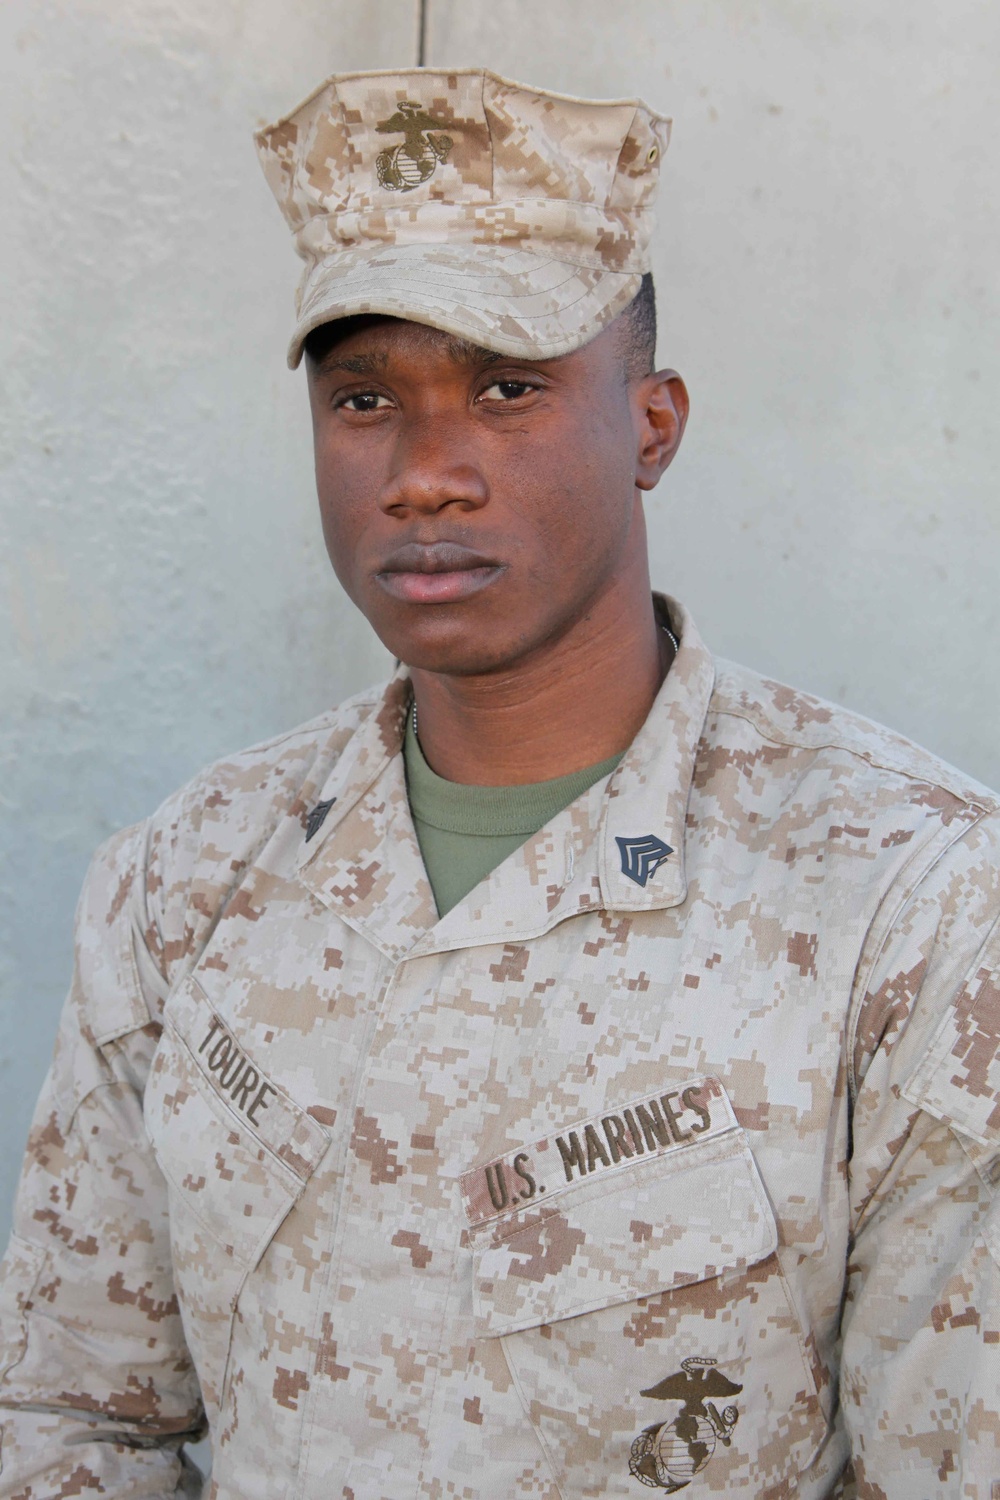 Atlanta Marine sees truth through war